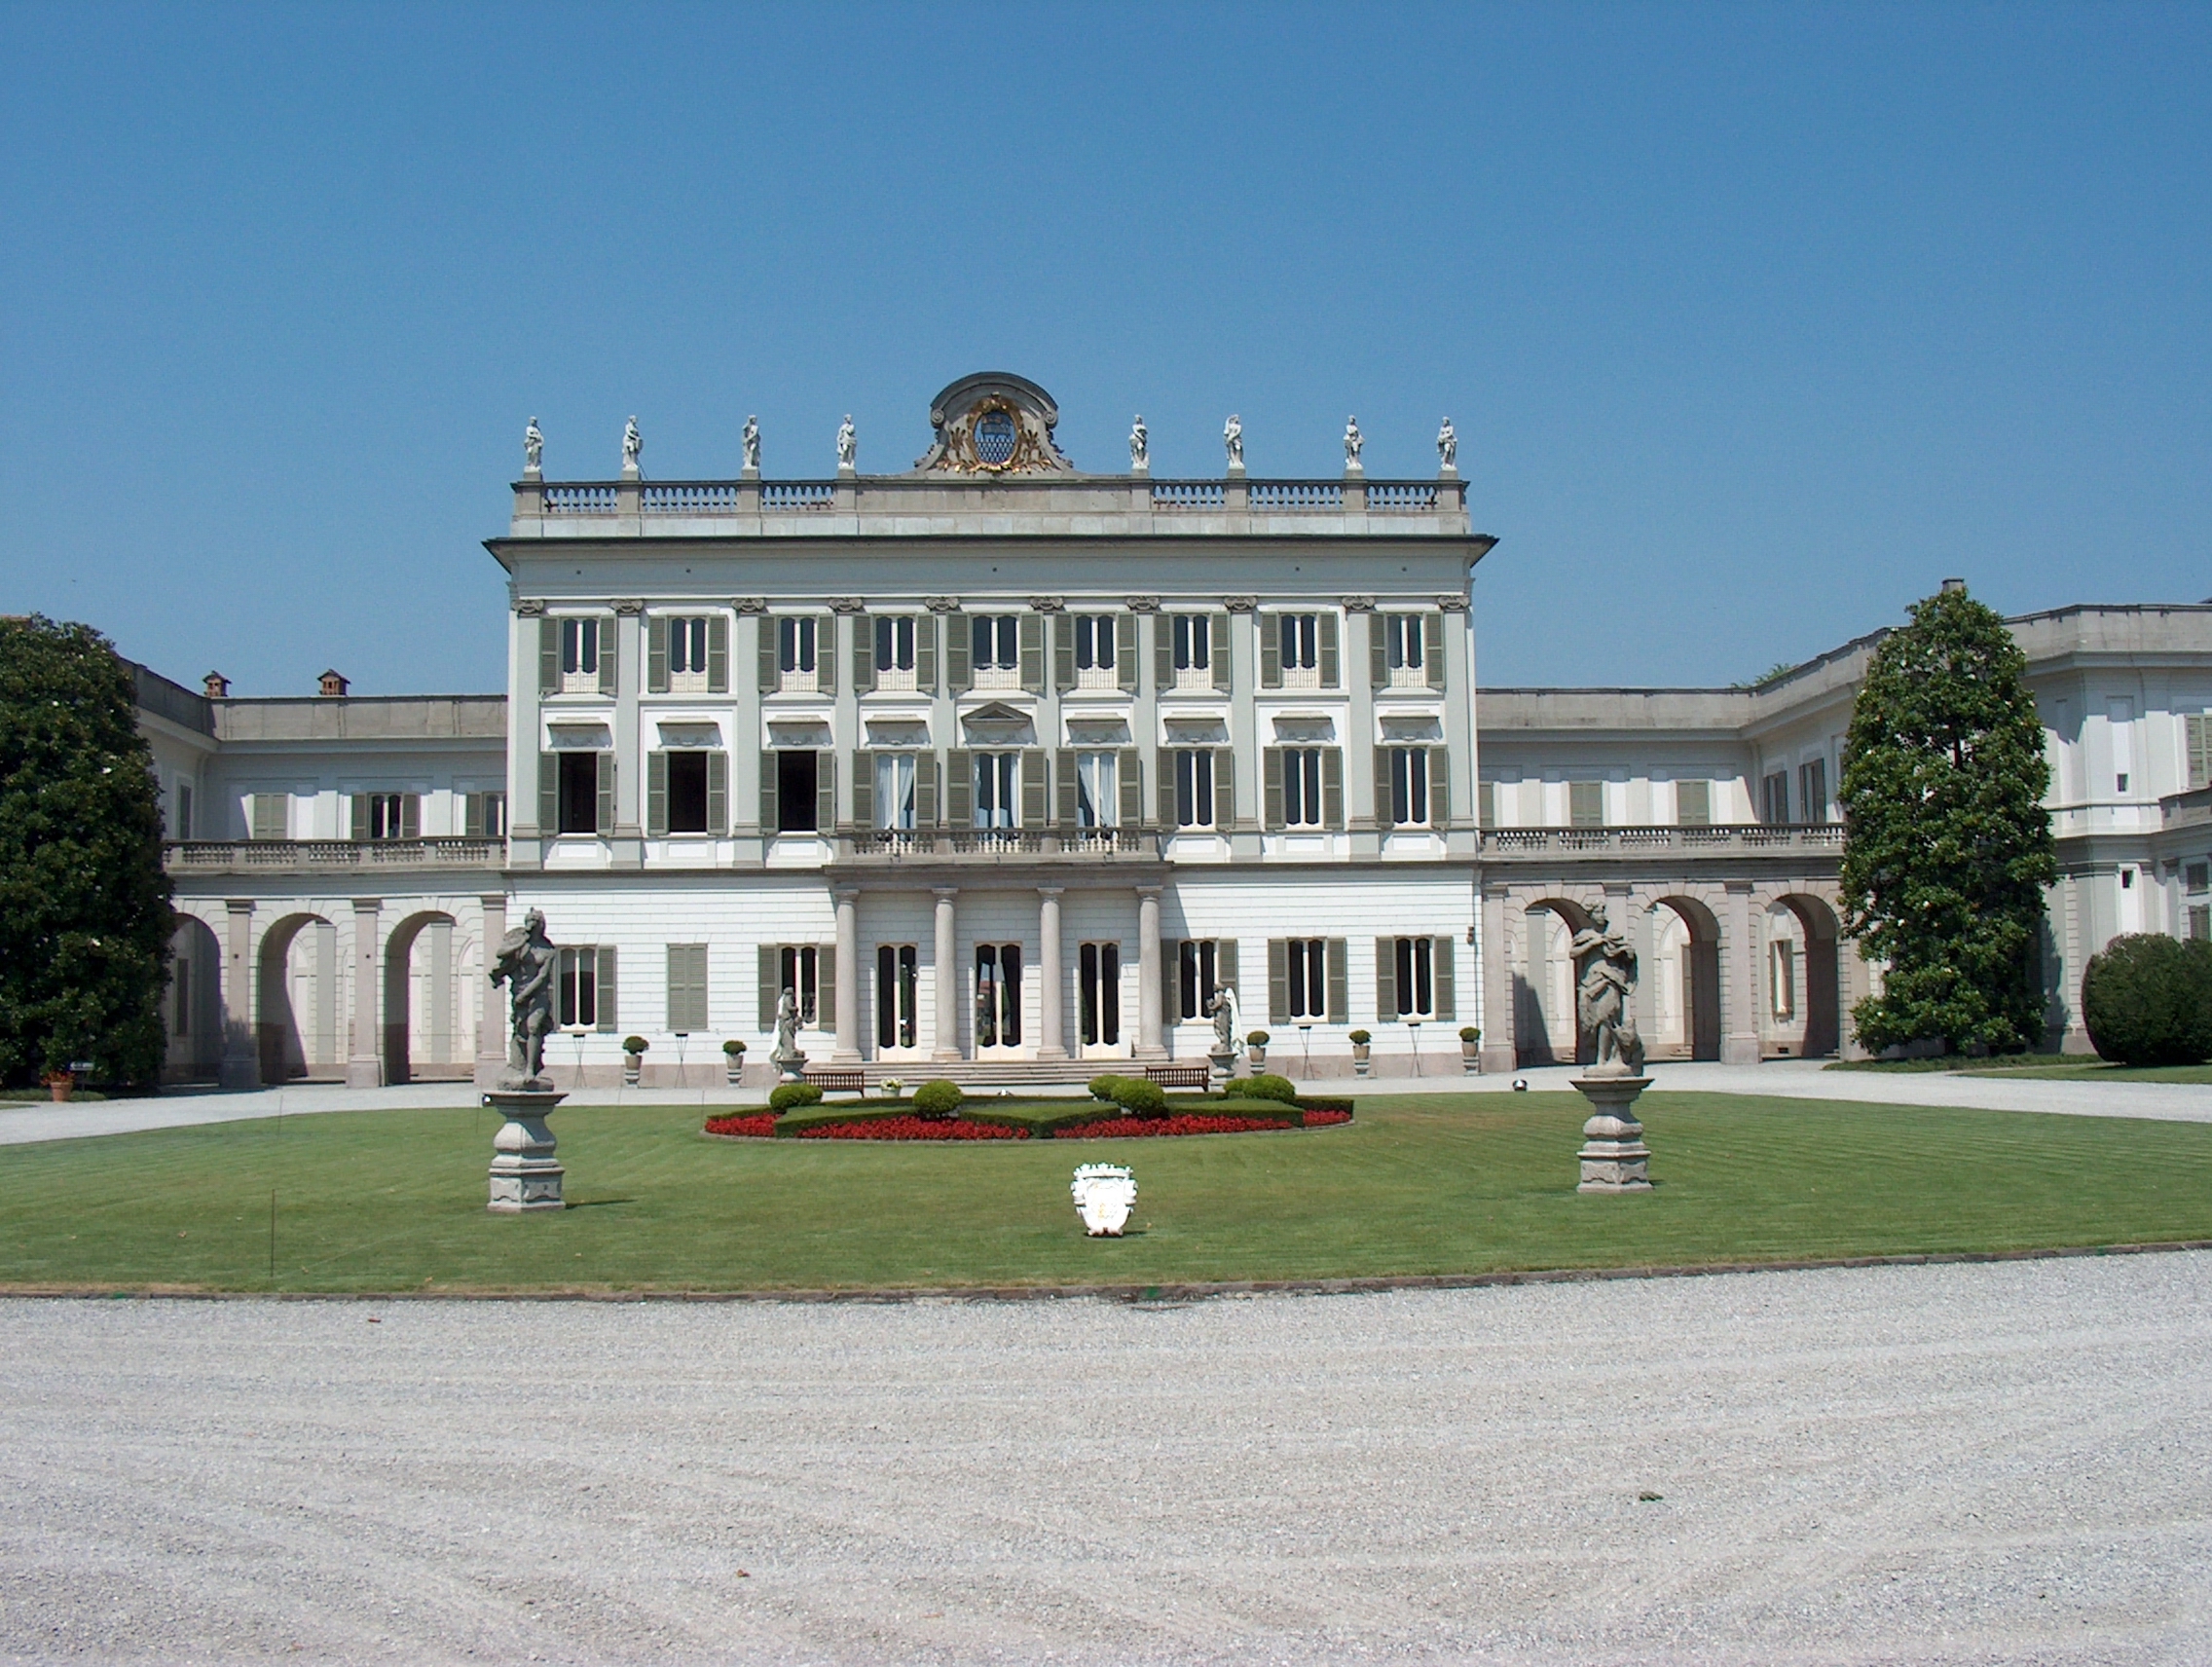 Villa Borromeo d'Adda